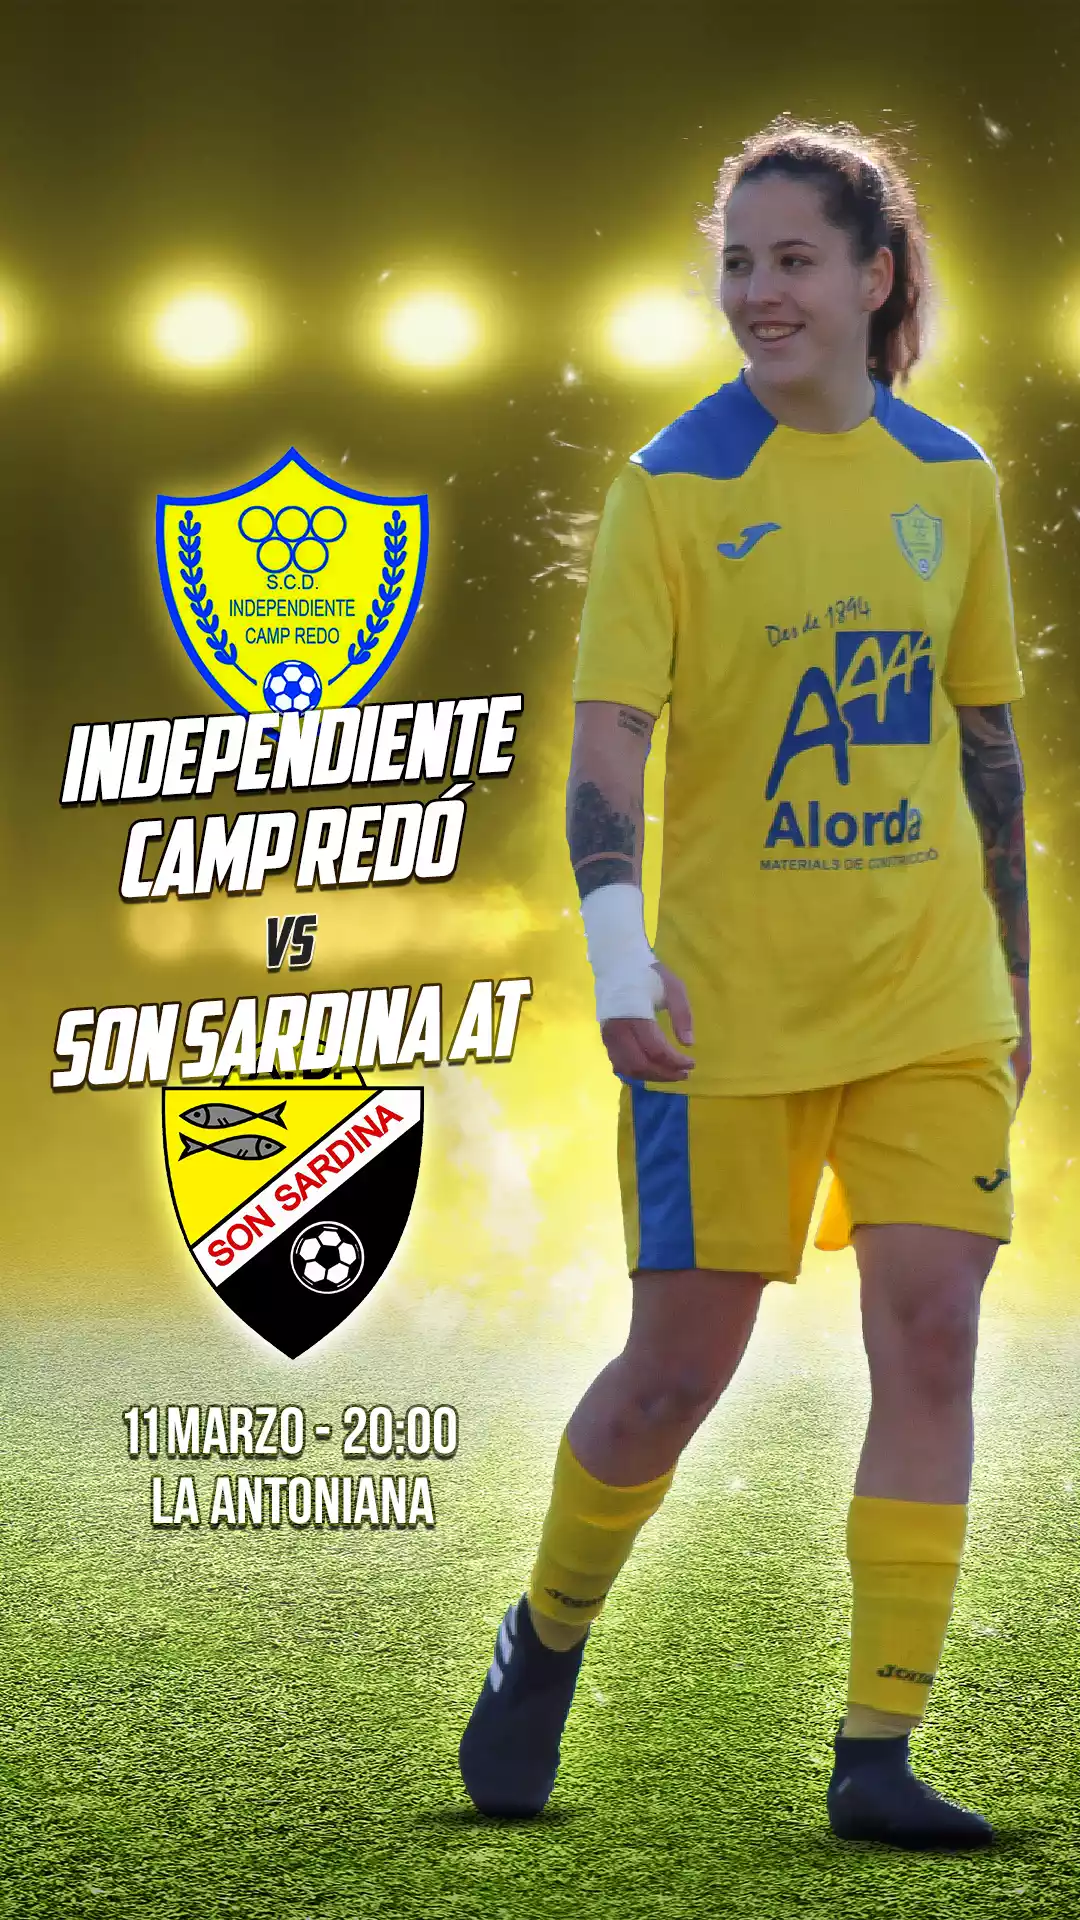 Match Day - Nabila (Independiente Camp Redó)